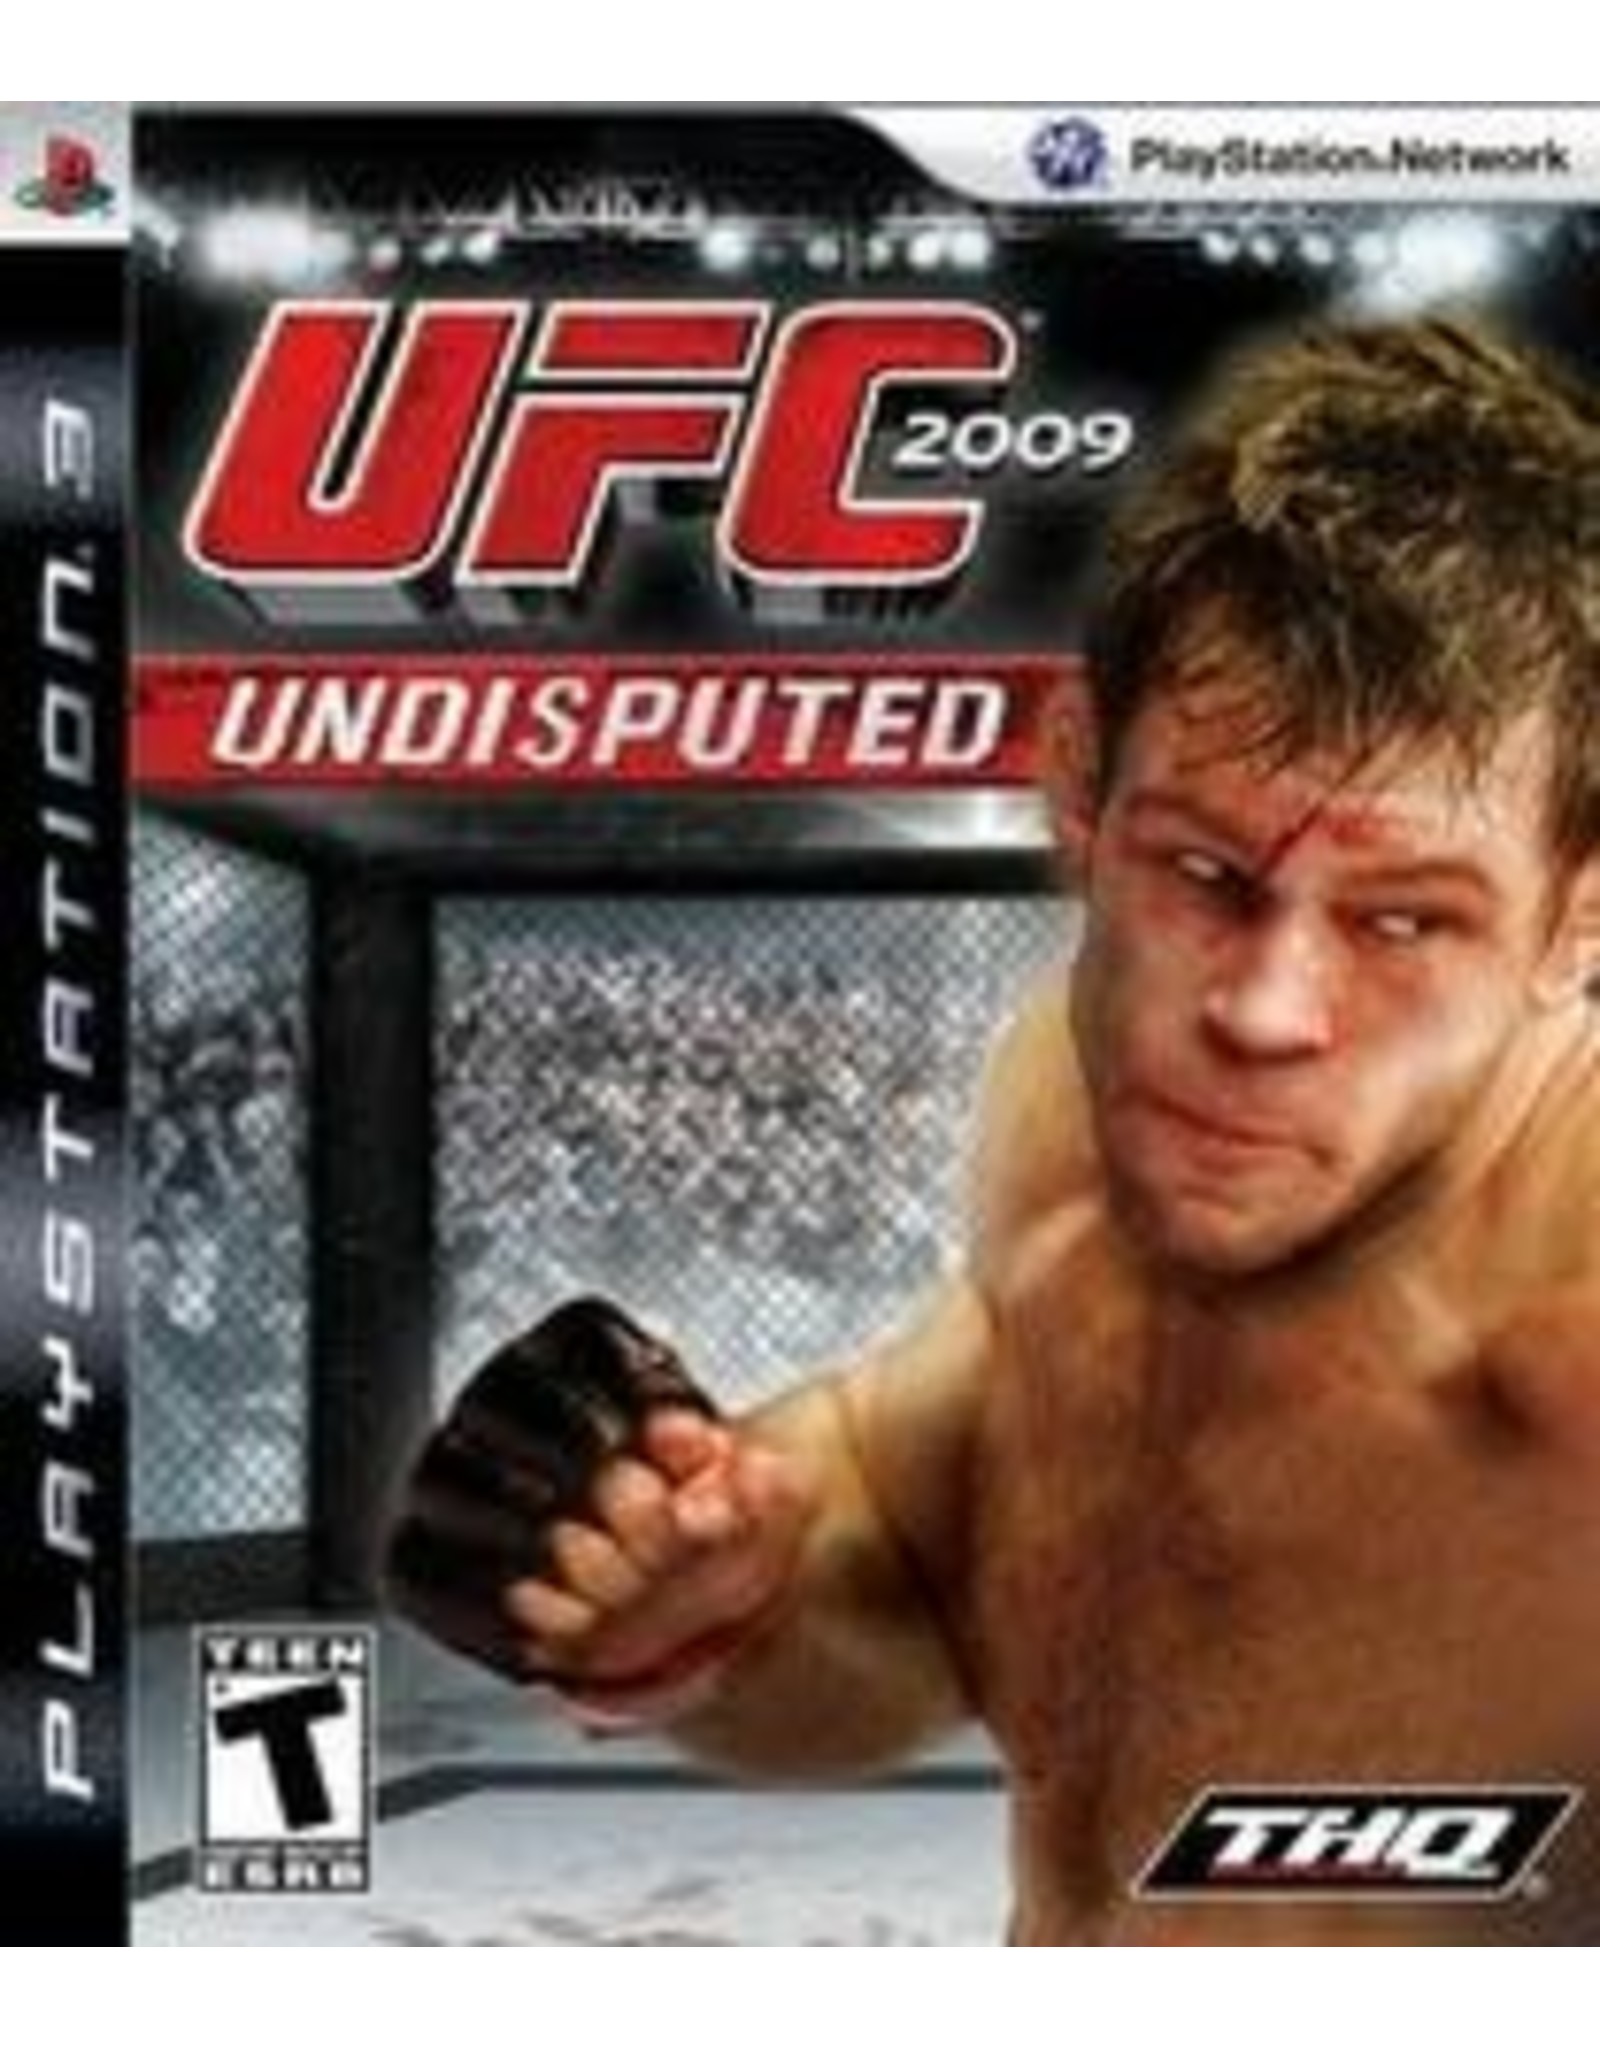 Playstation 3 UFC 2009 Undisputed (CiB)